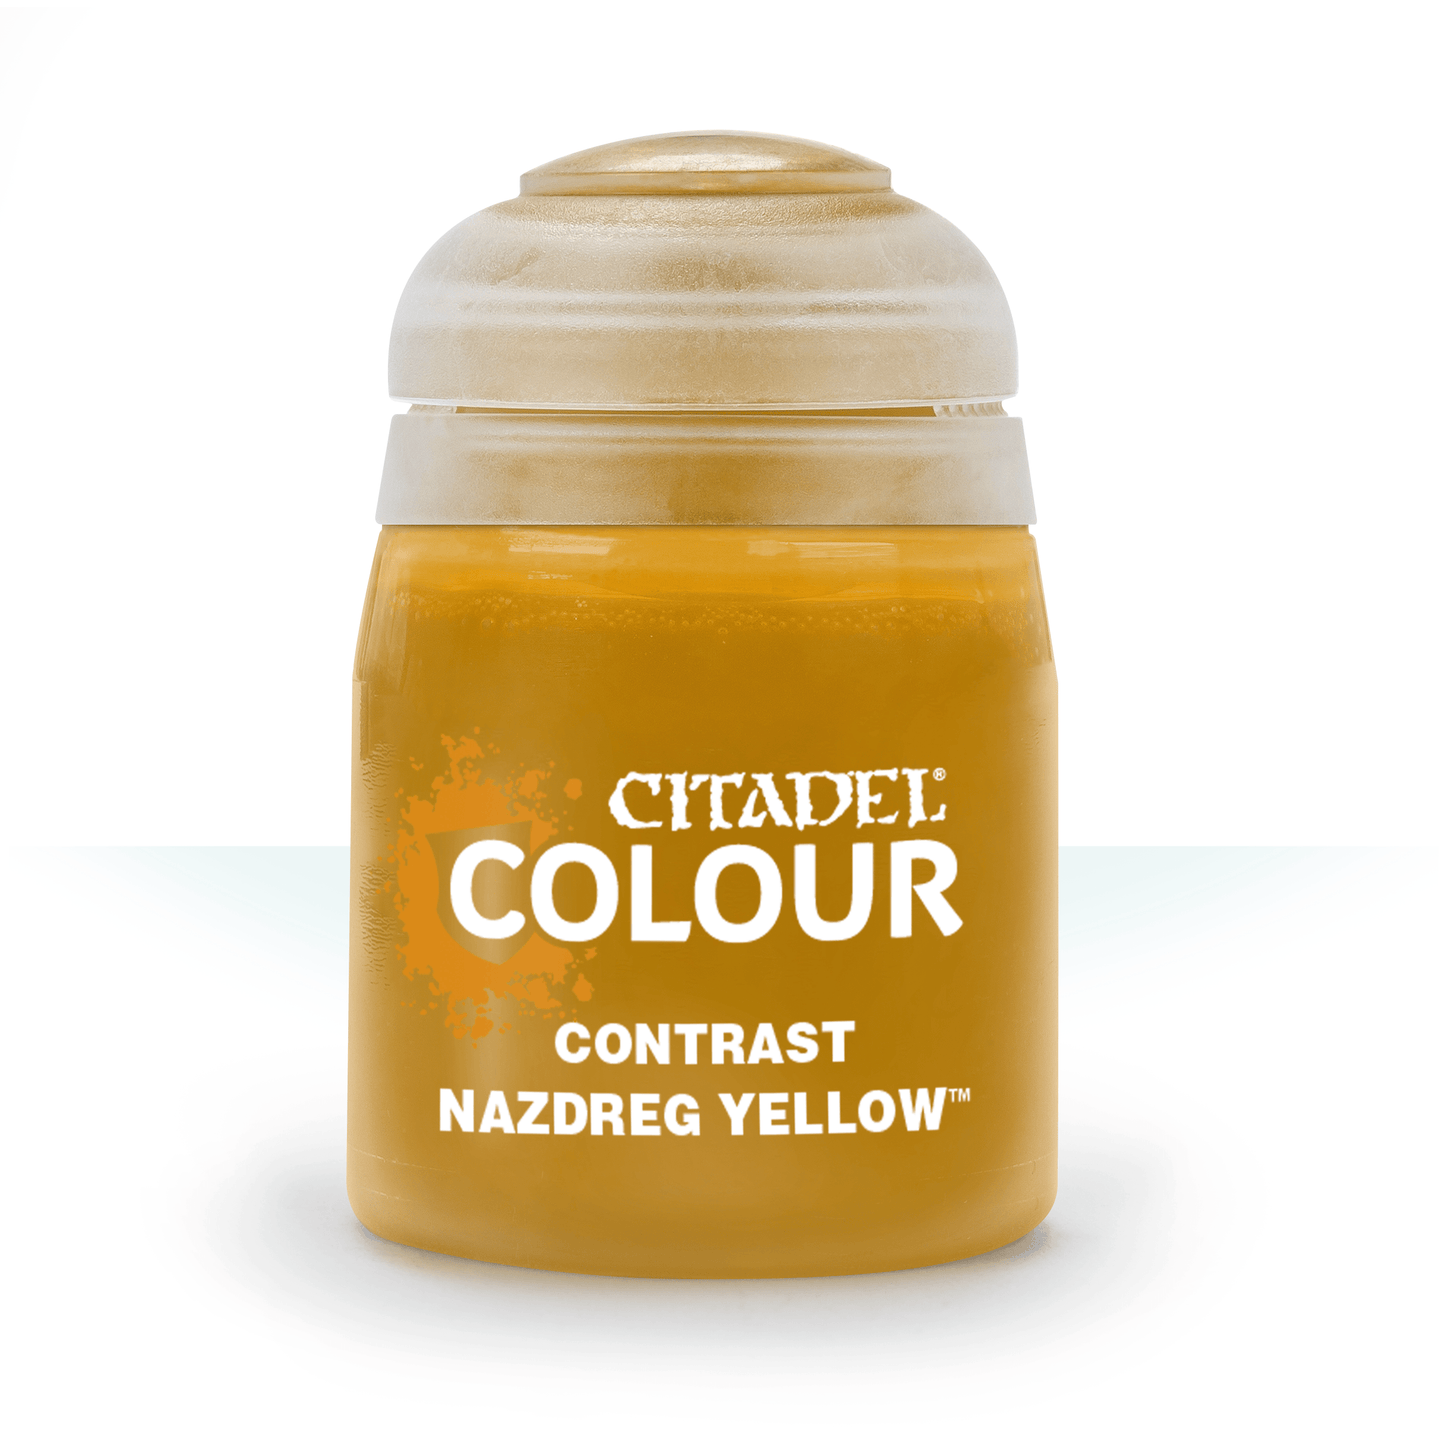 Citadel Colour - Nazdreg Yellow Contrast Paint